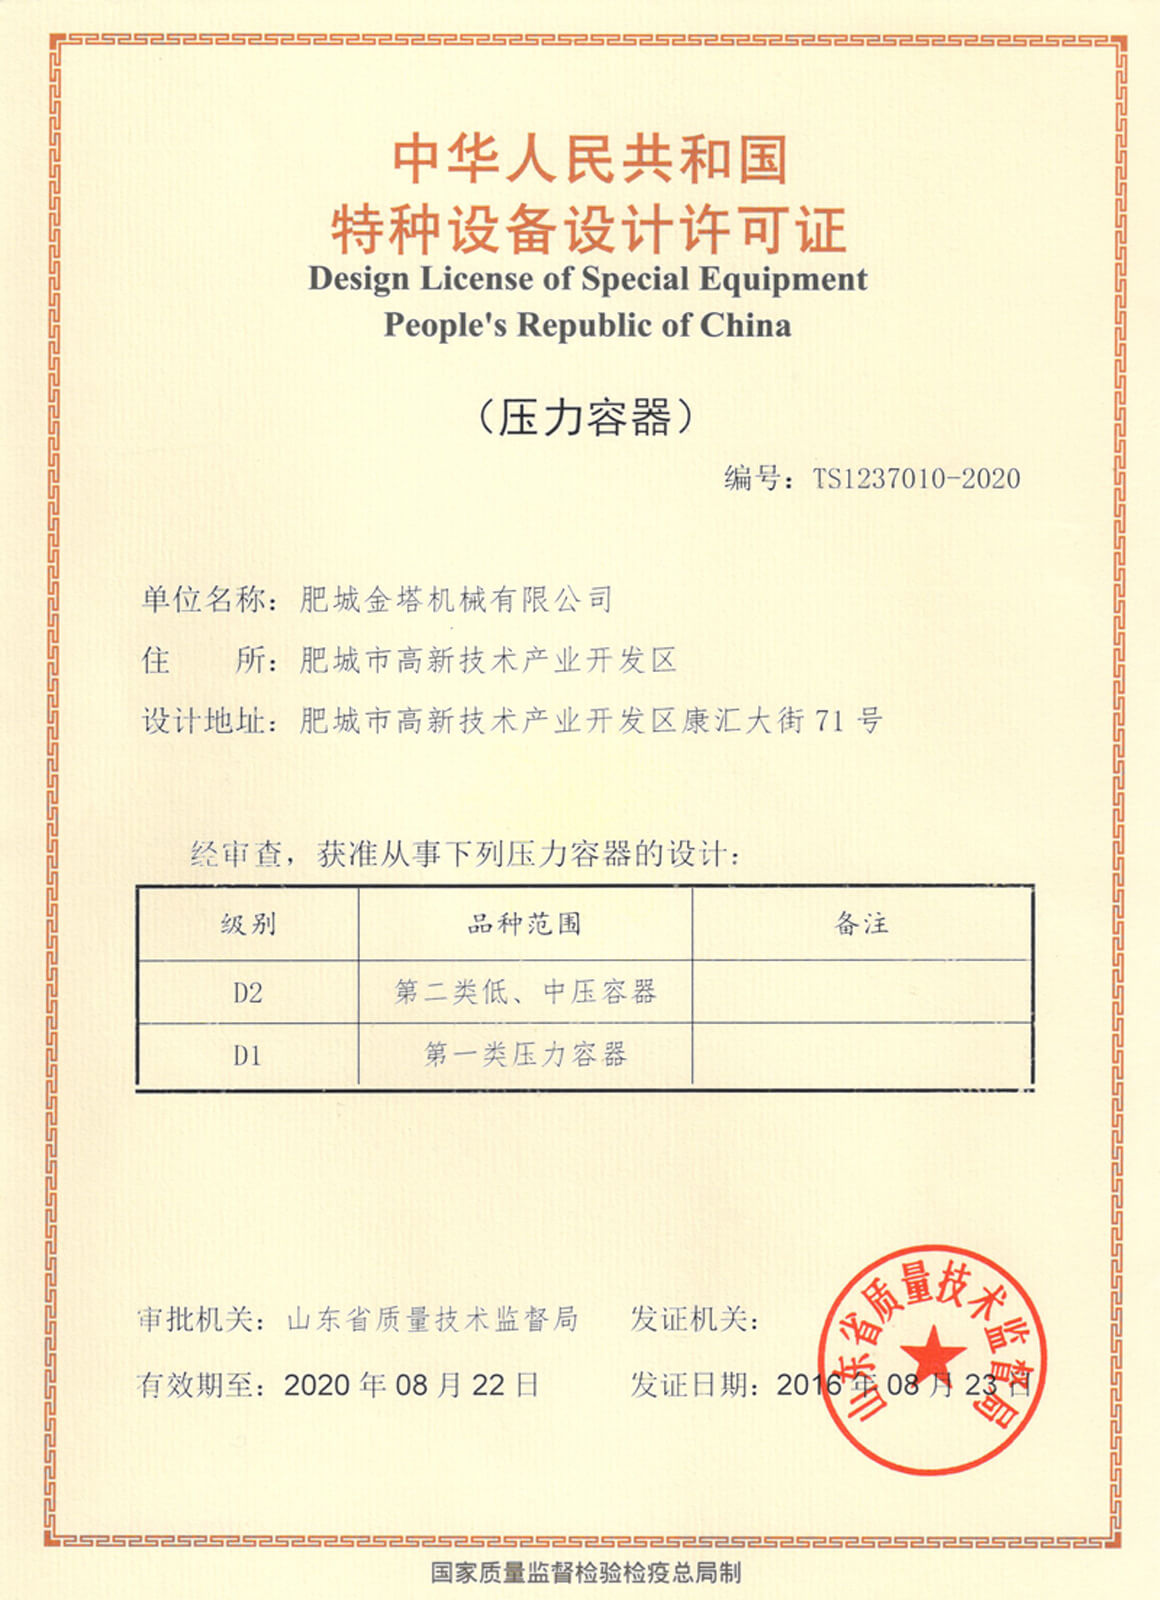 D1D2 design qualification certificate